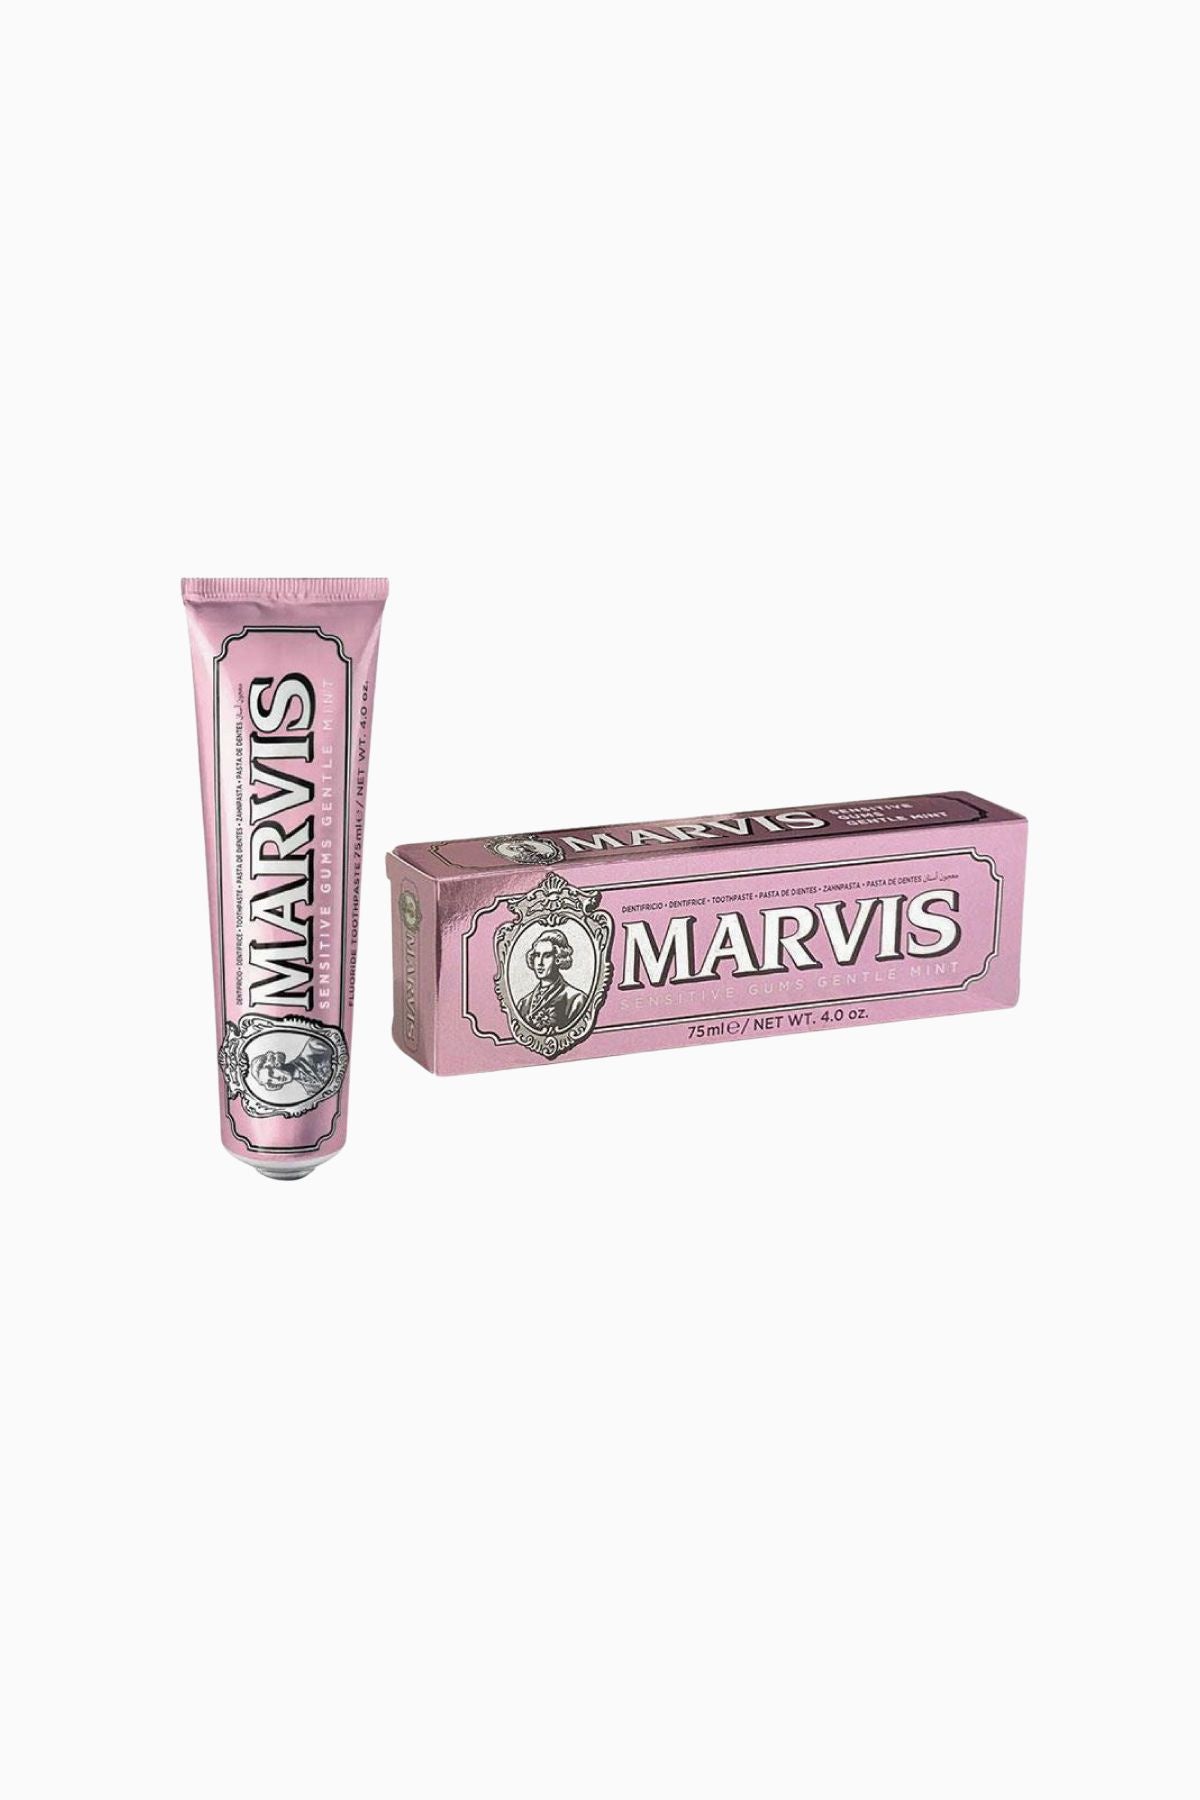 Marvis Toothpaste - Sensitive Gums Gentle Mint